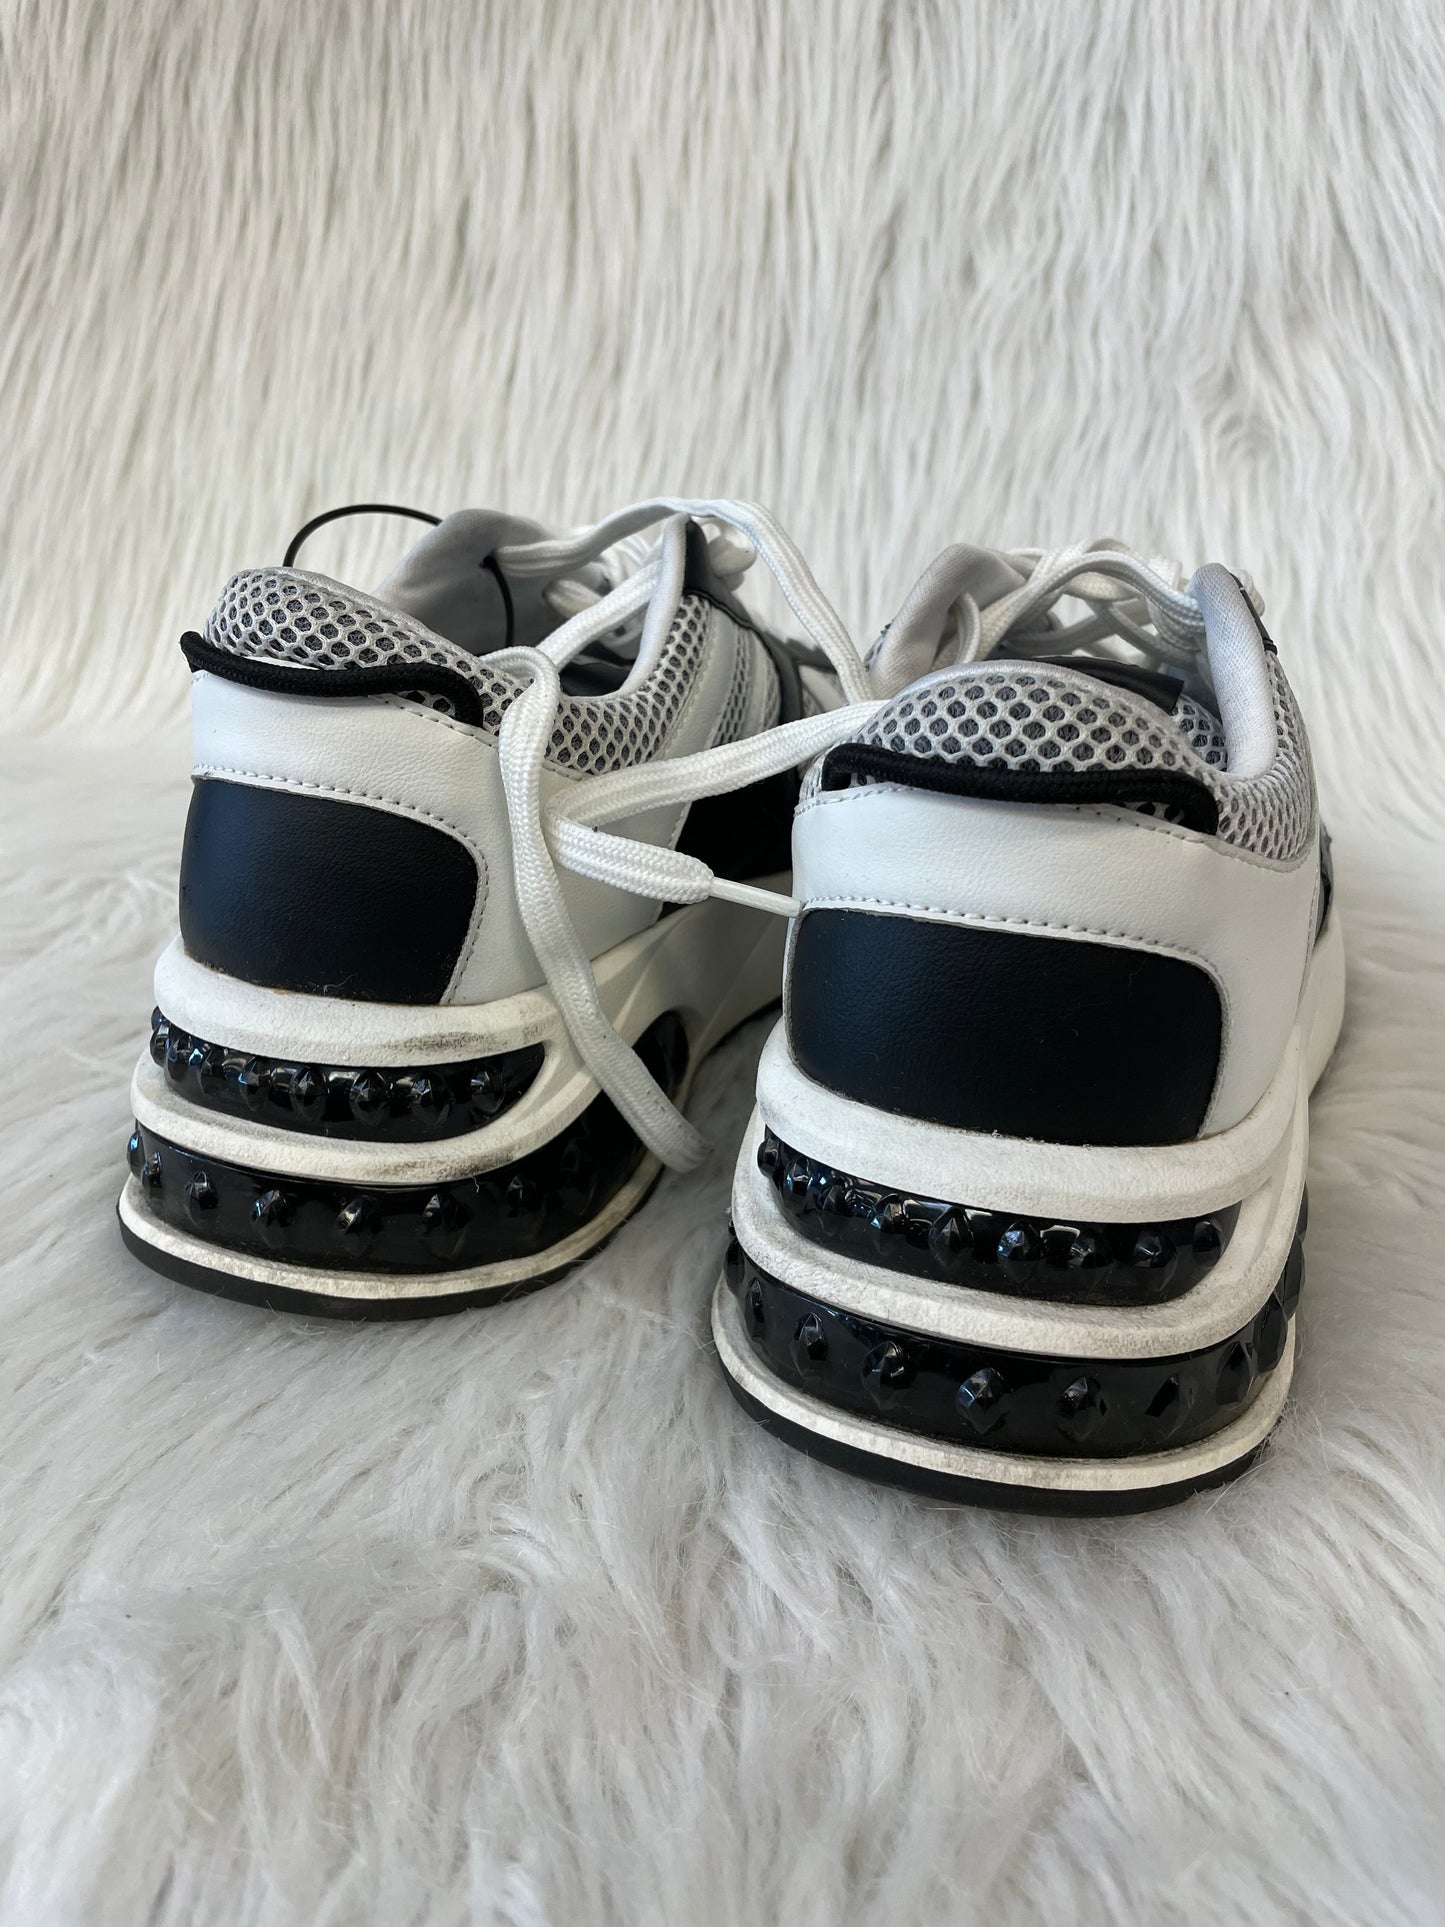 Black & White Shoes Sneakers Platform Steve Madden, Size 9.5